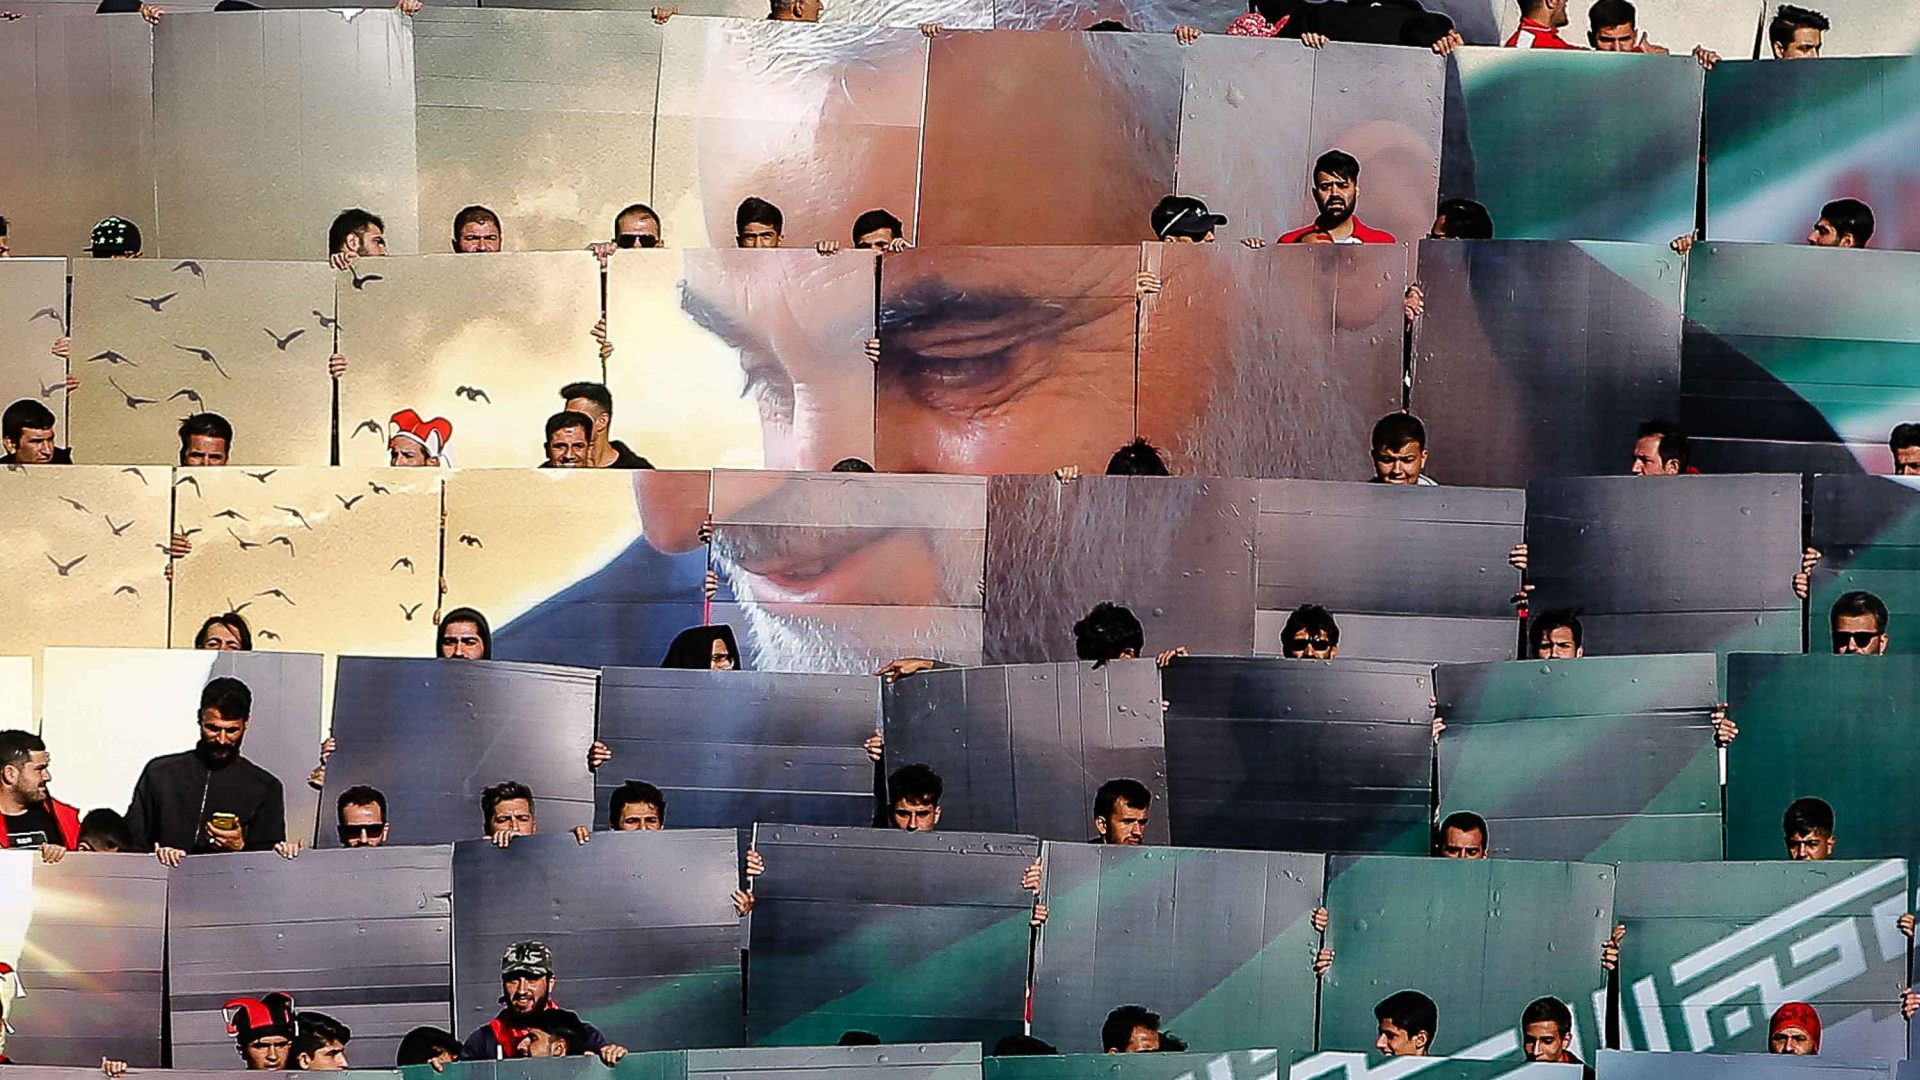 Spectators at the Tehran Derby.